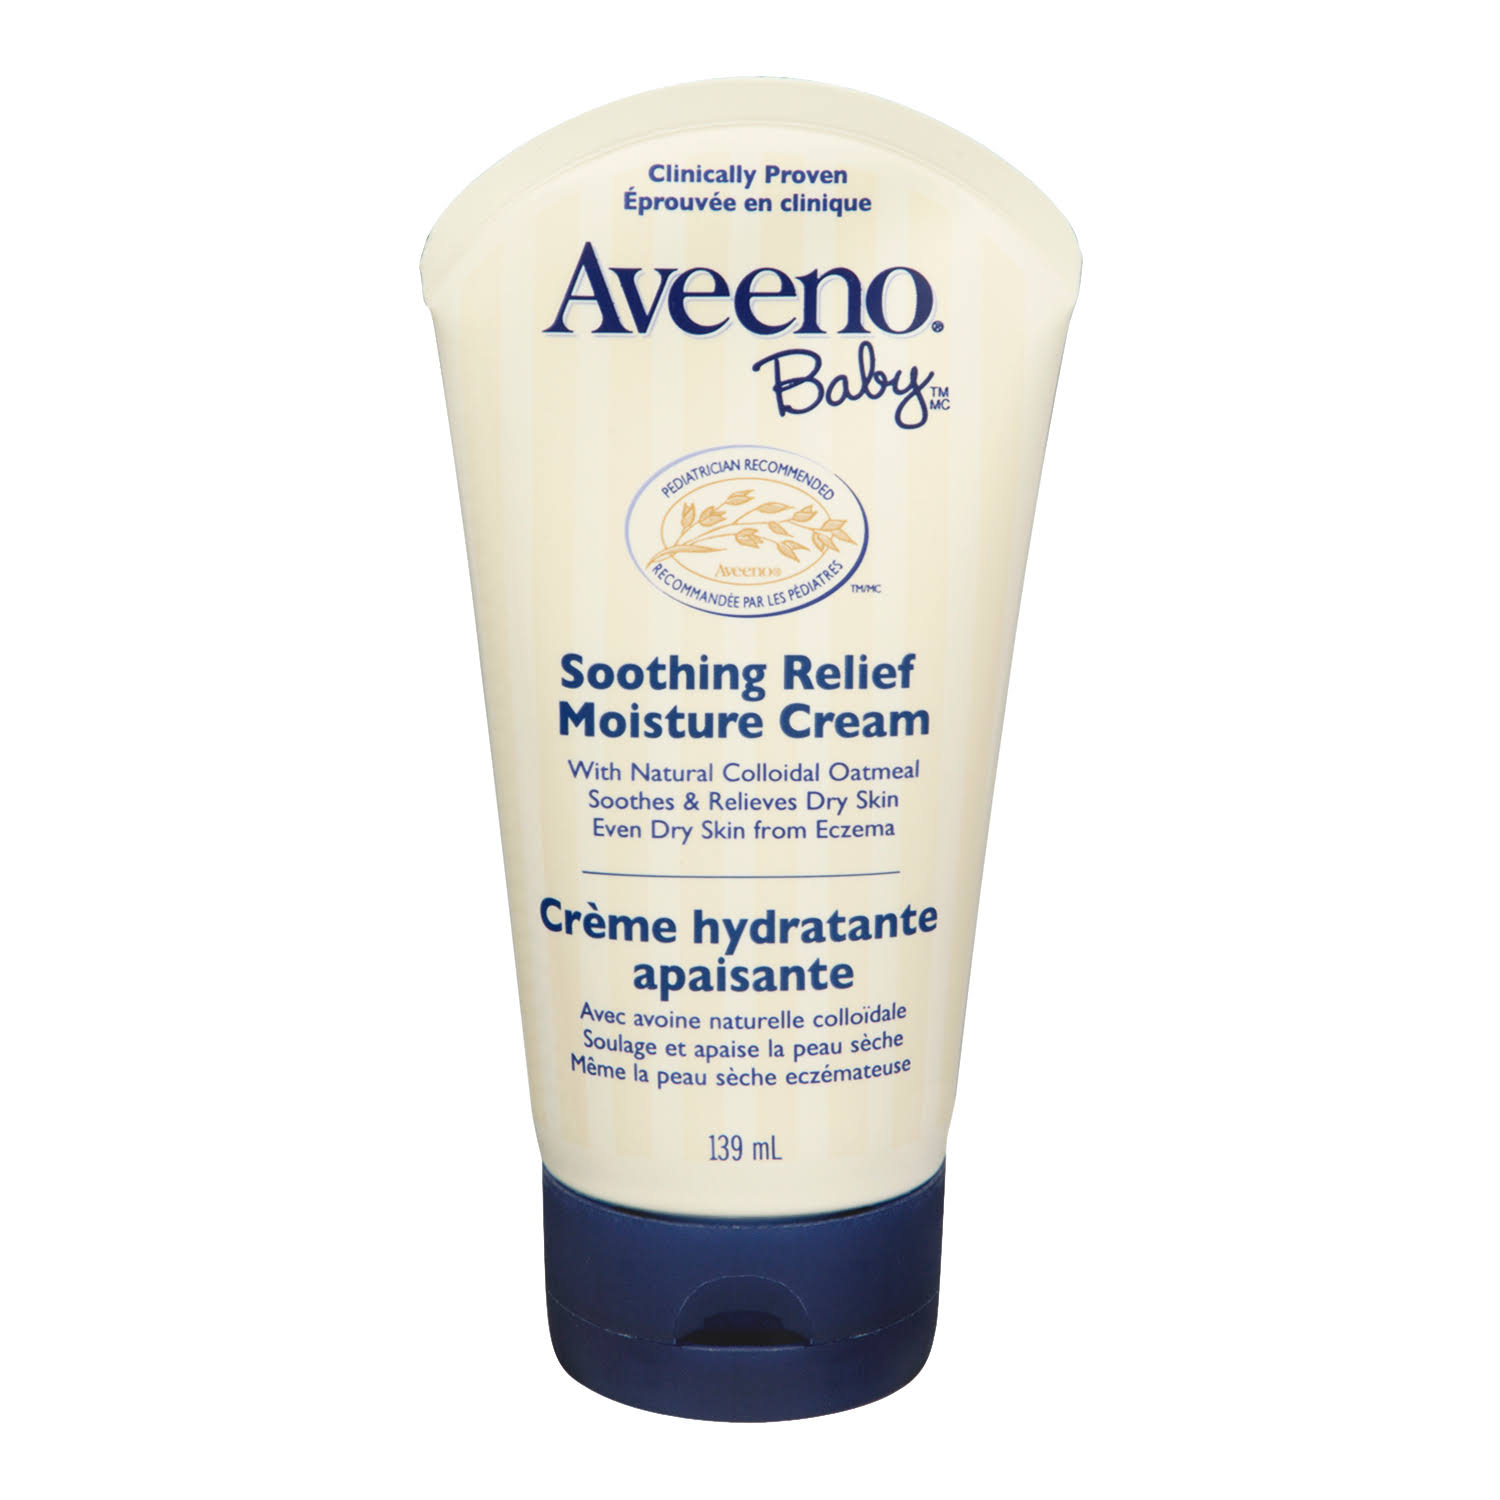 Aveeno Baby Soothing Relief Moisture Cream - 139ml